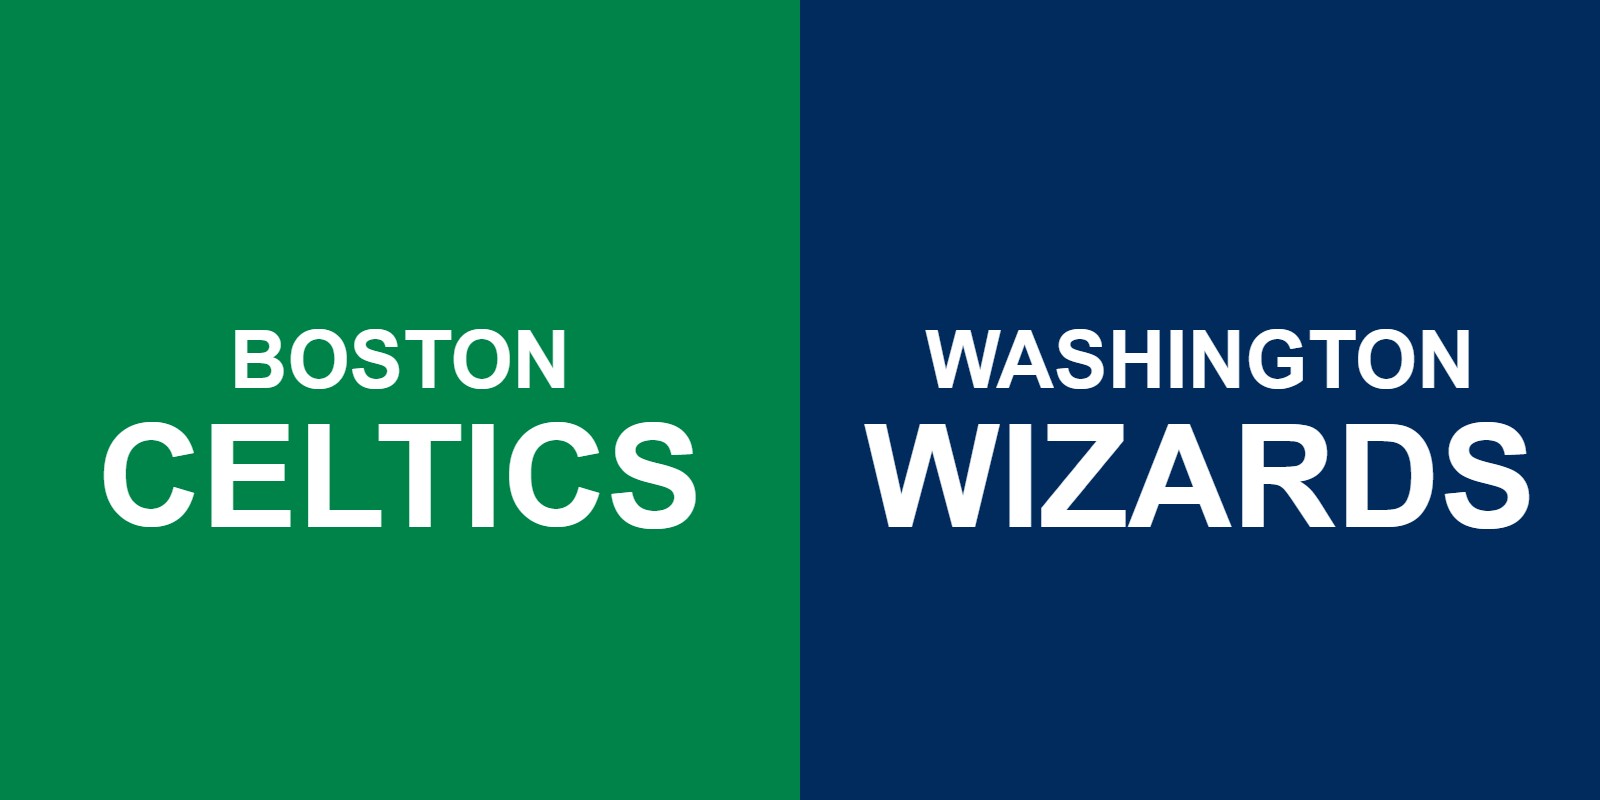 Celtics vs Wizards